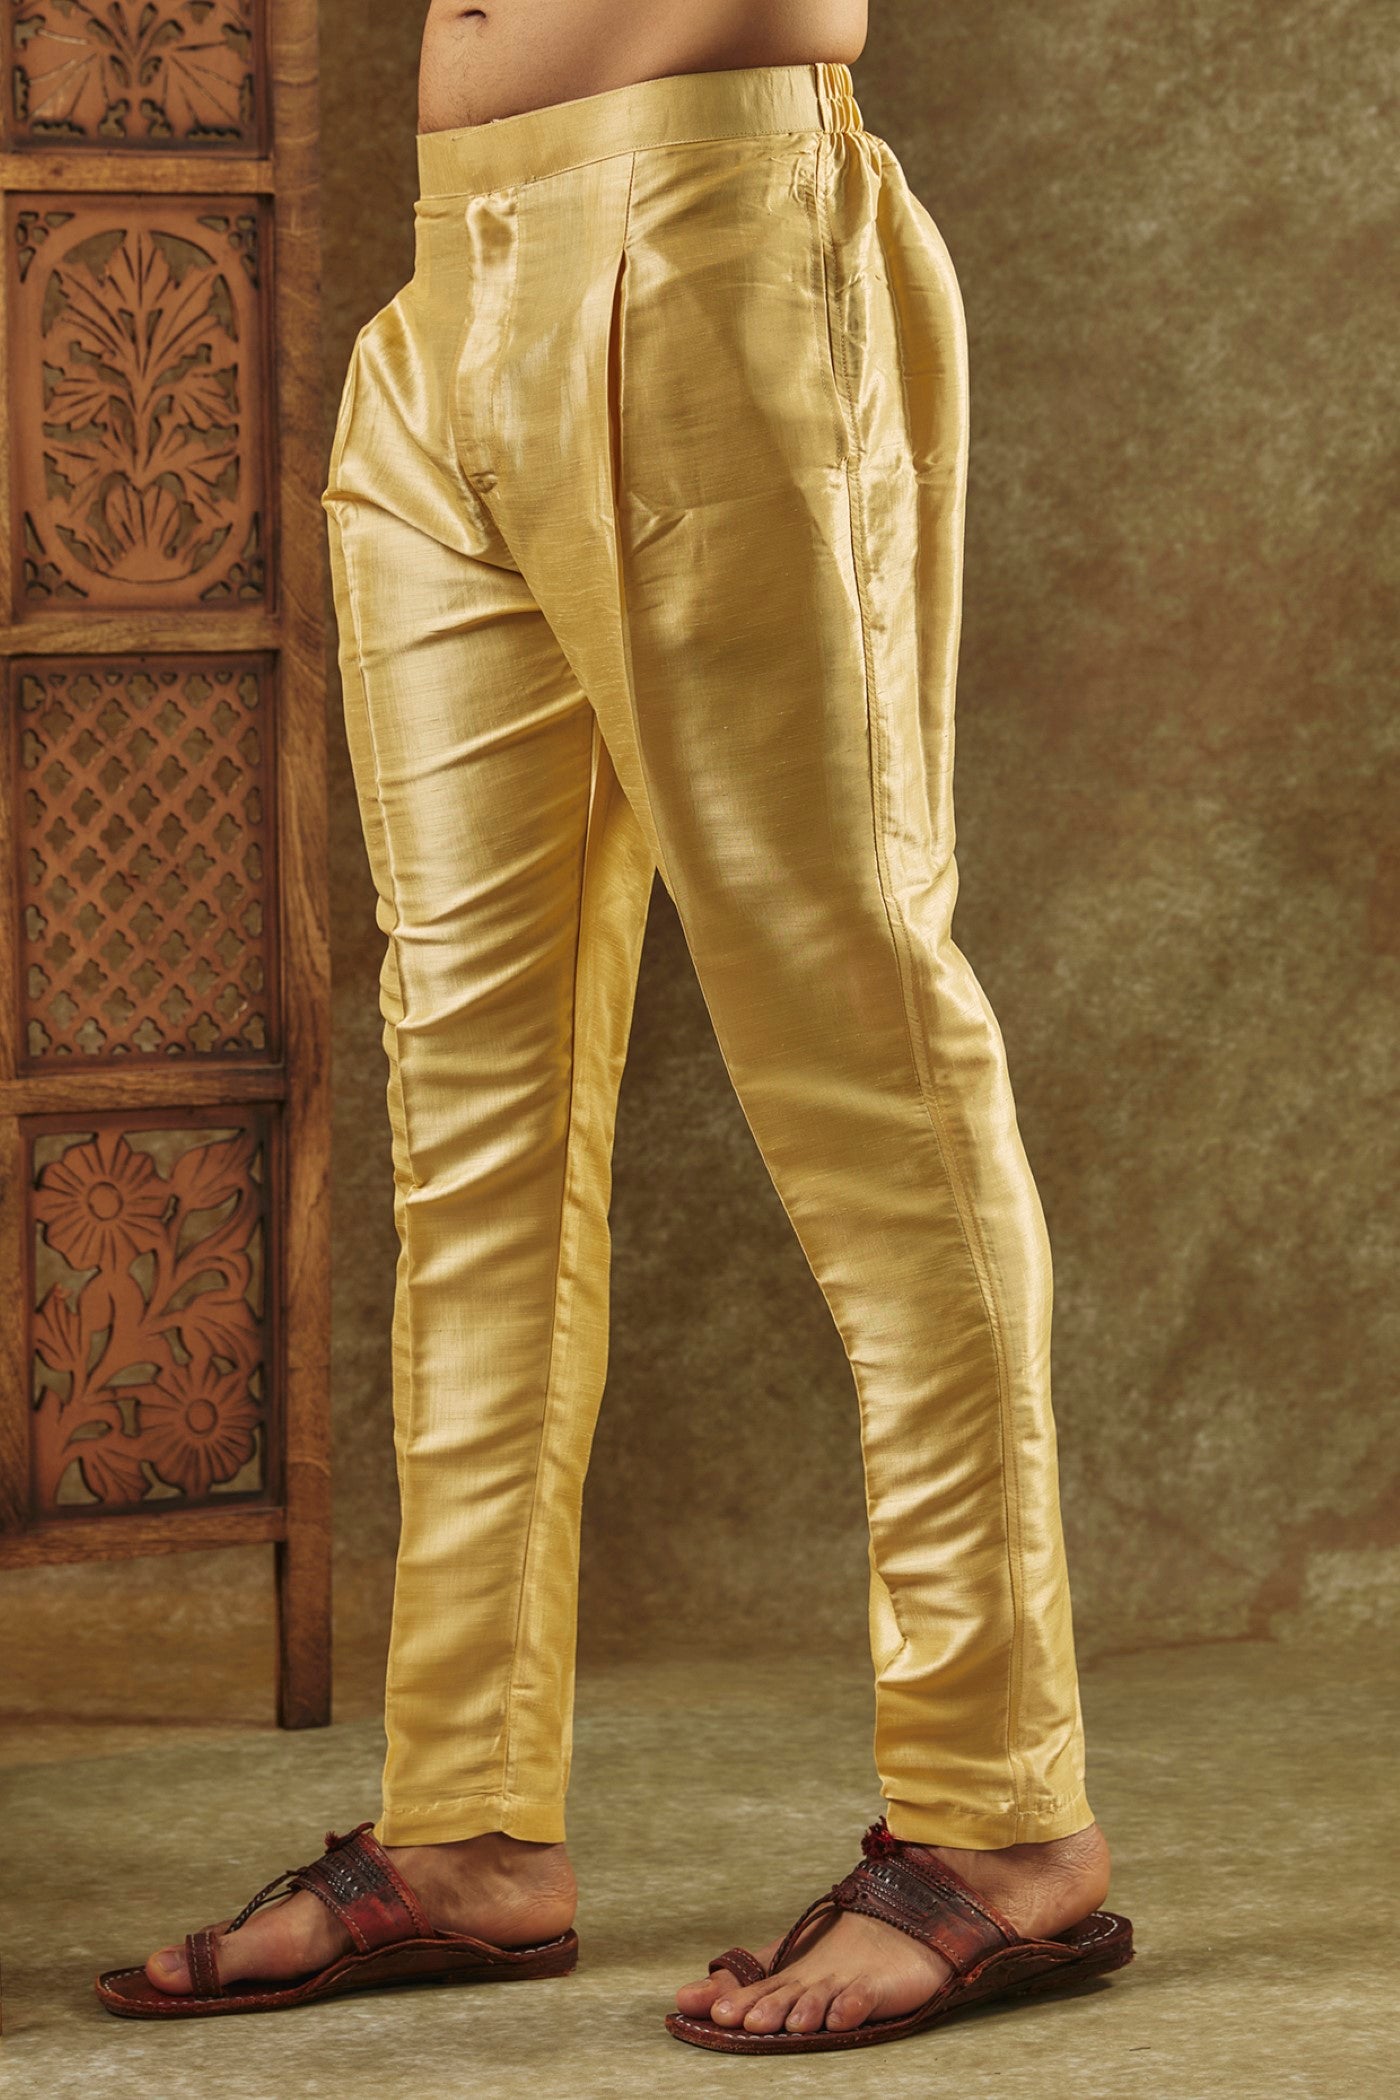 Hugo Boss JENIVER LILAC LAVENDER 36A US 4P Jacket Pants 2-Piece Set Suit  Wool | eBay